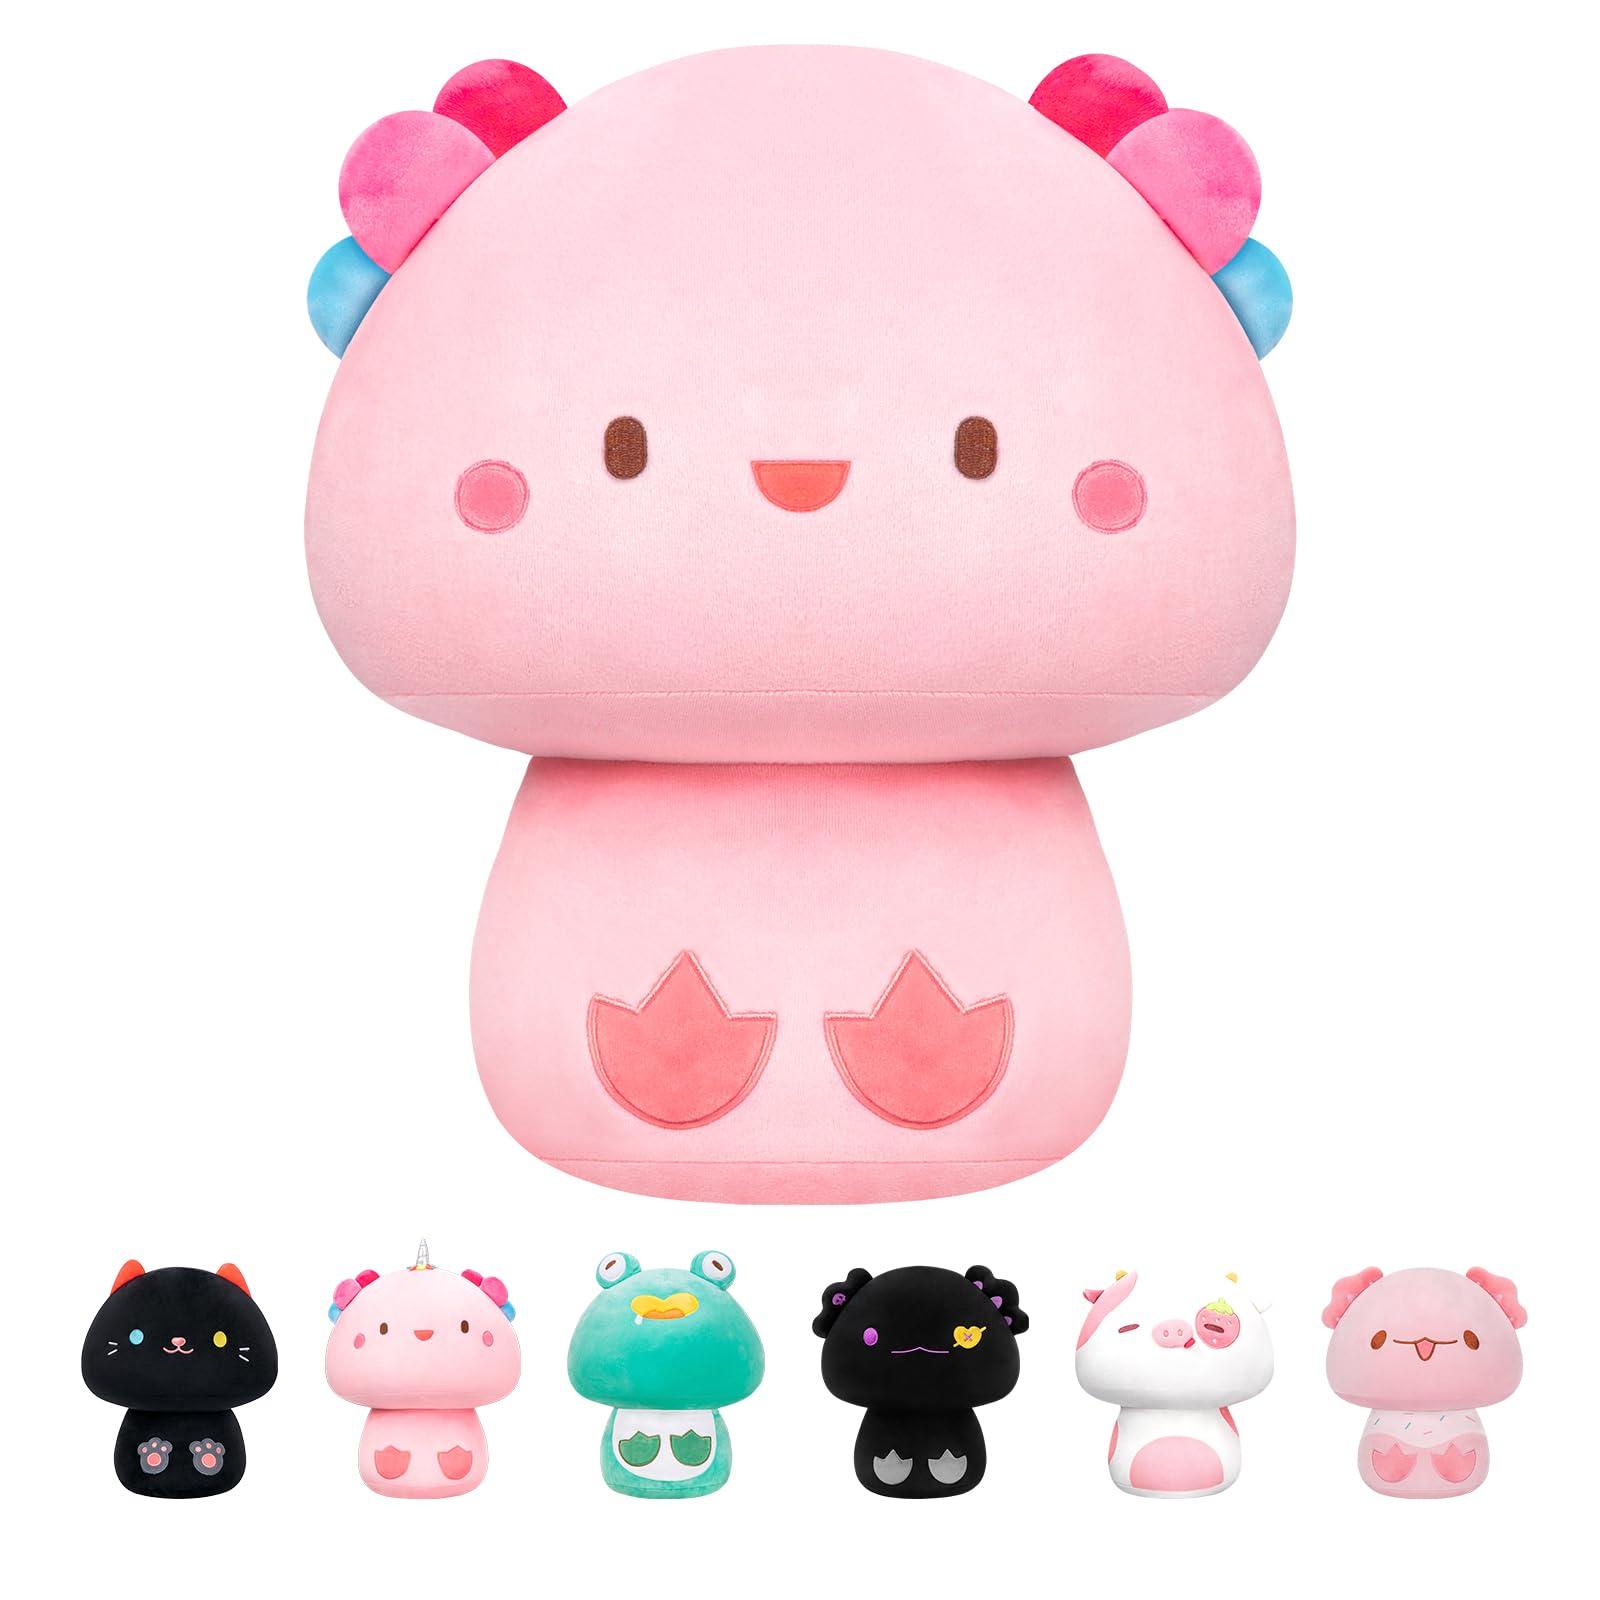 Mewaii 8'' Soft Axolotl Mushroom Plushie Stuffed Animal Plush Pillow Squishy Toy - Pink